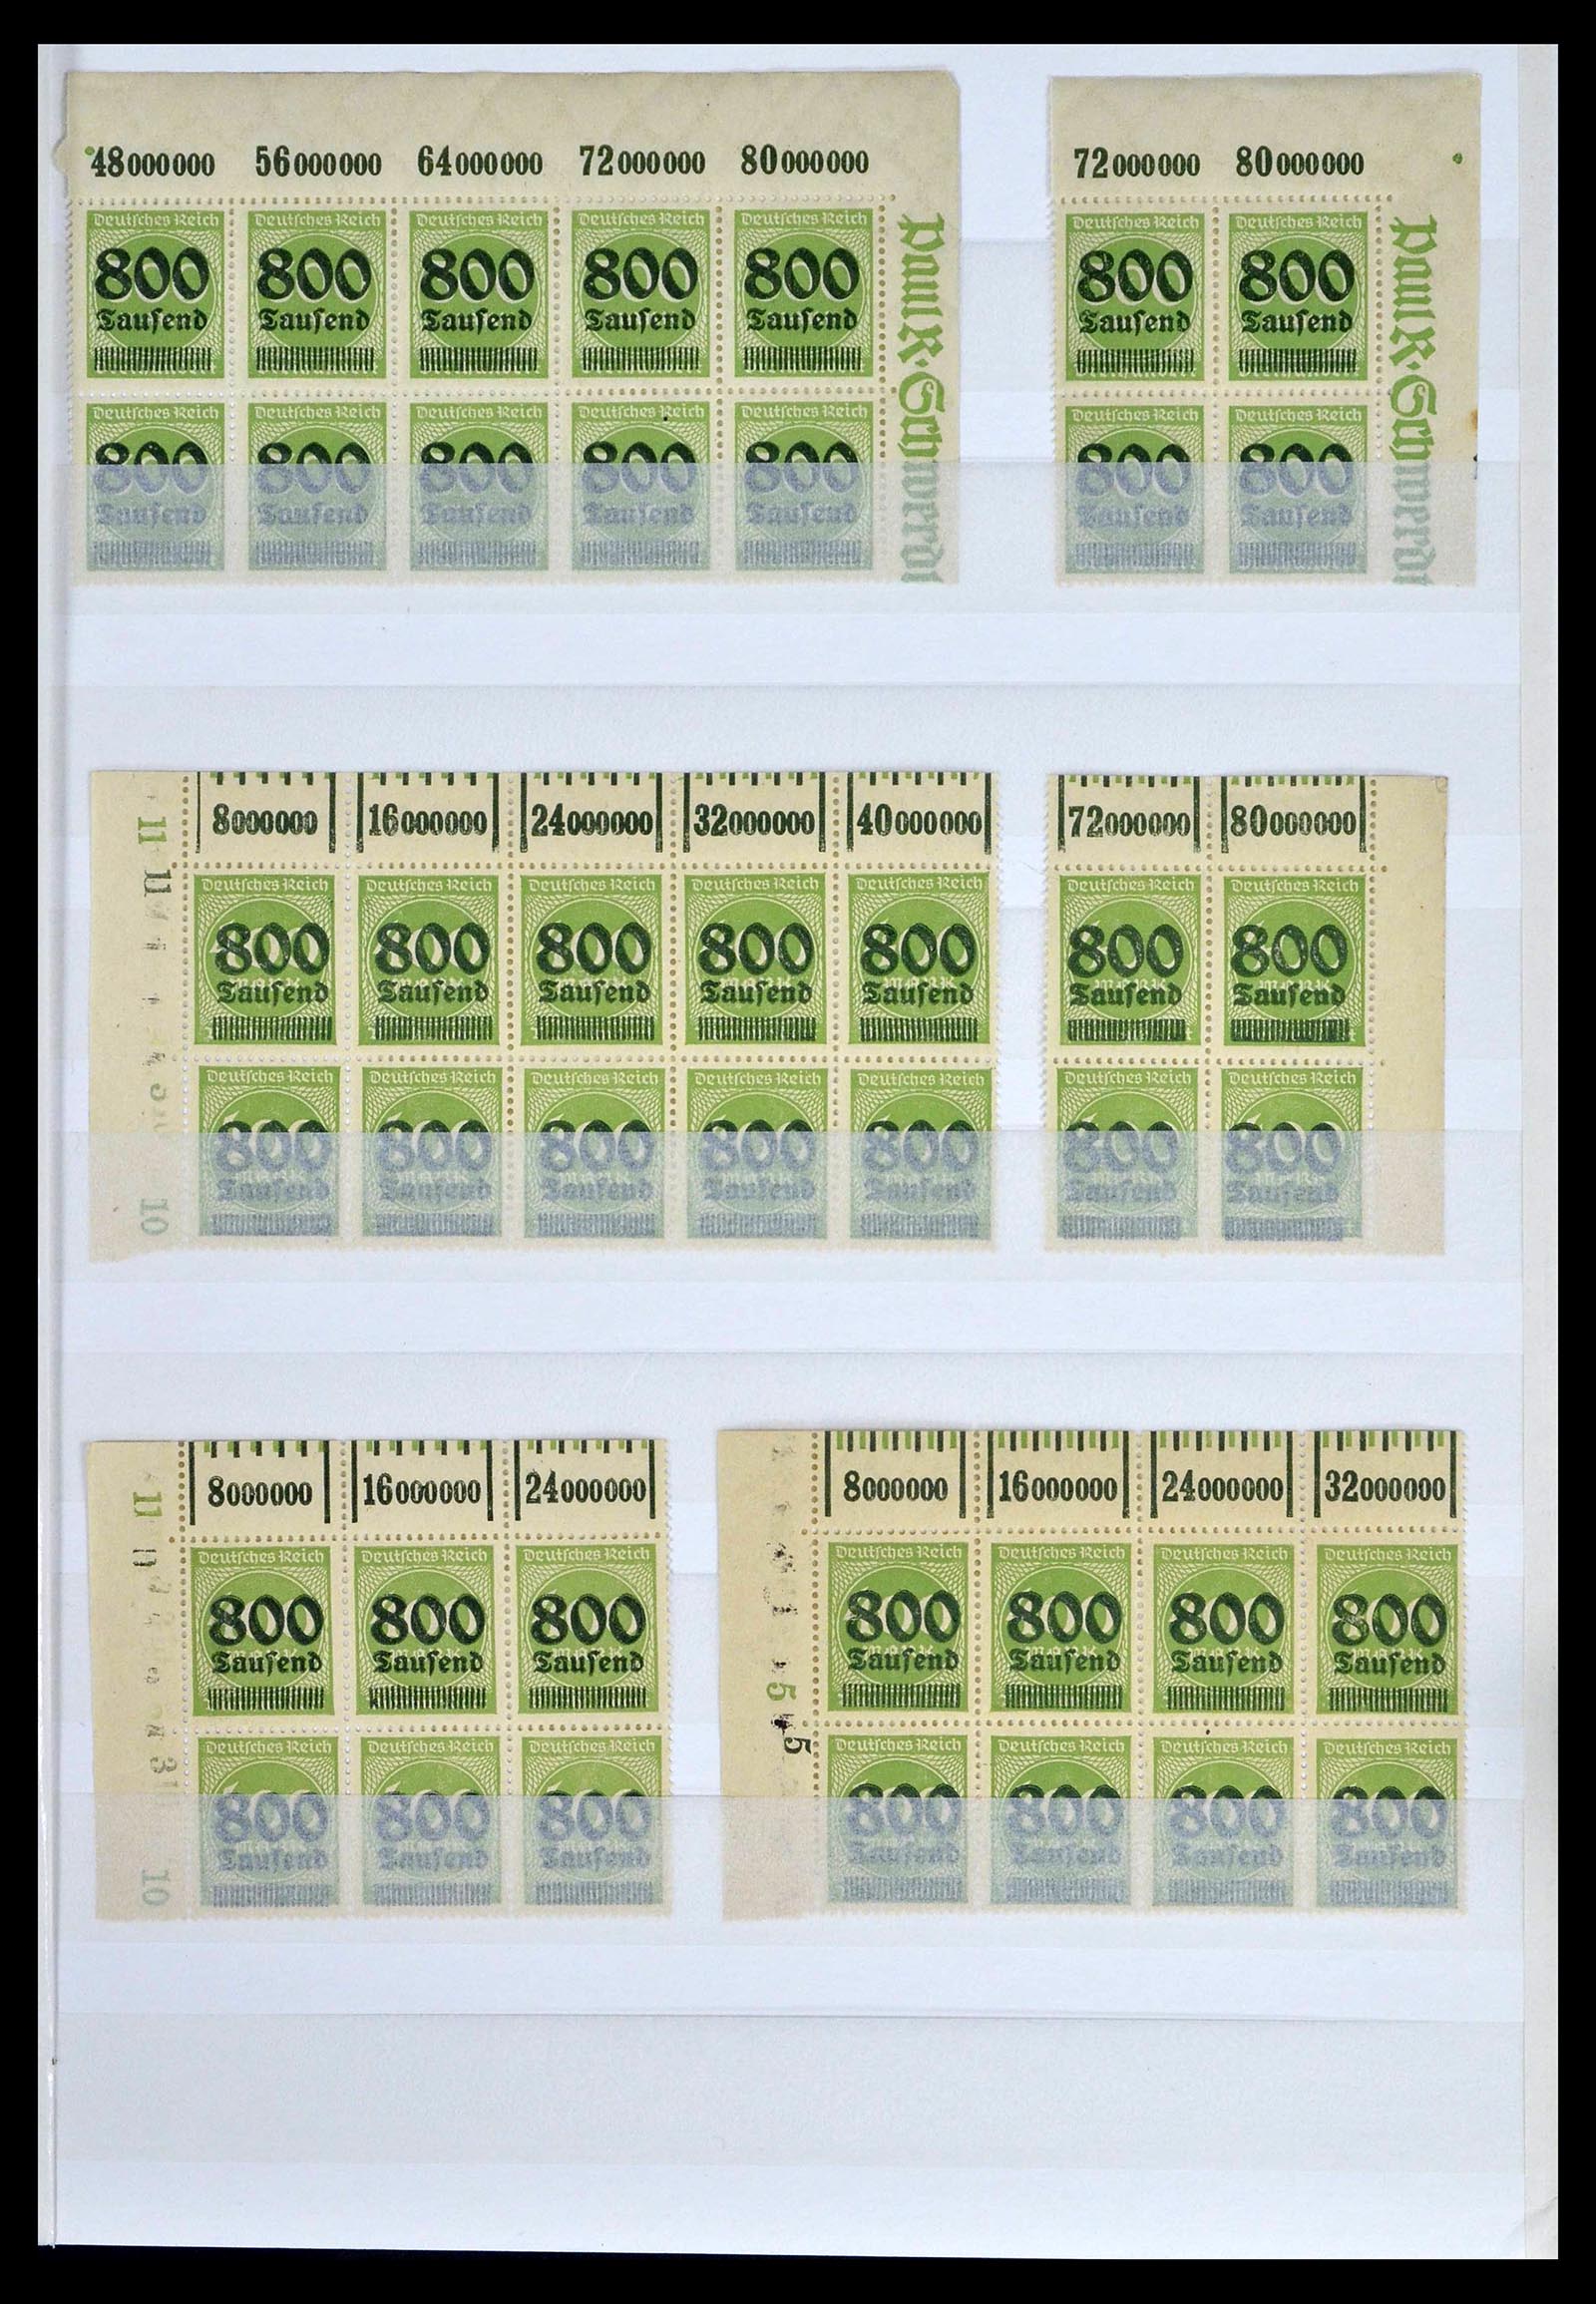 39254 0059 - Stamp collection 39254 German Reich MNH top margins.